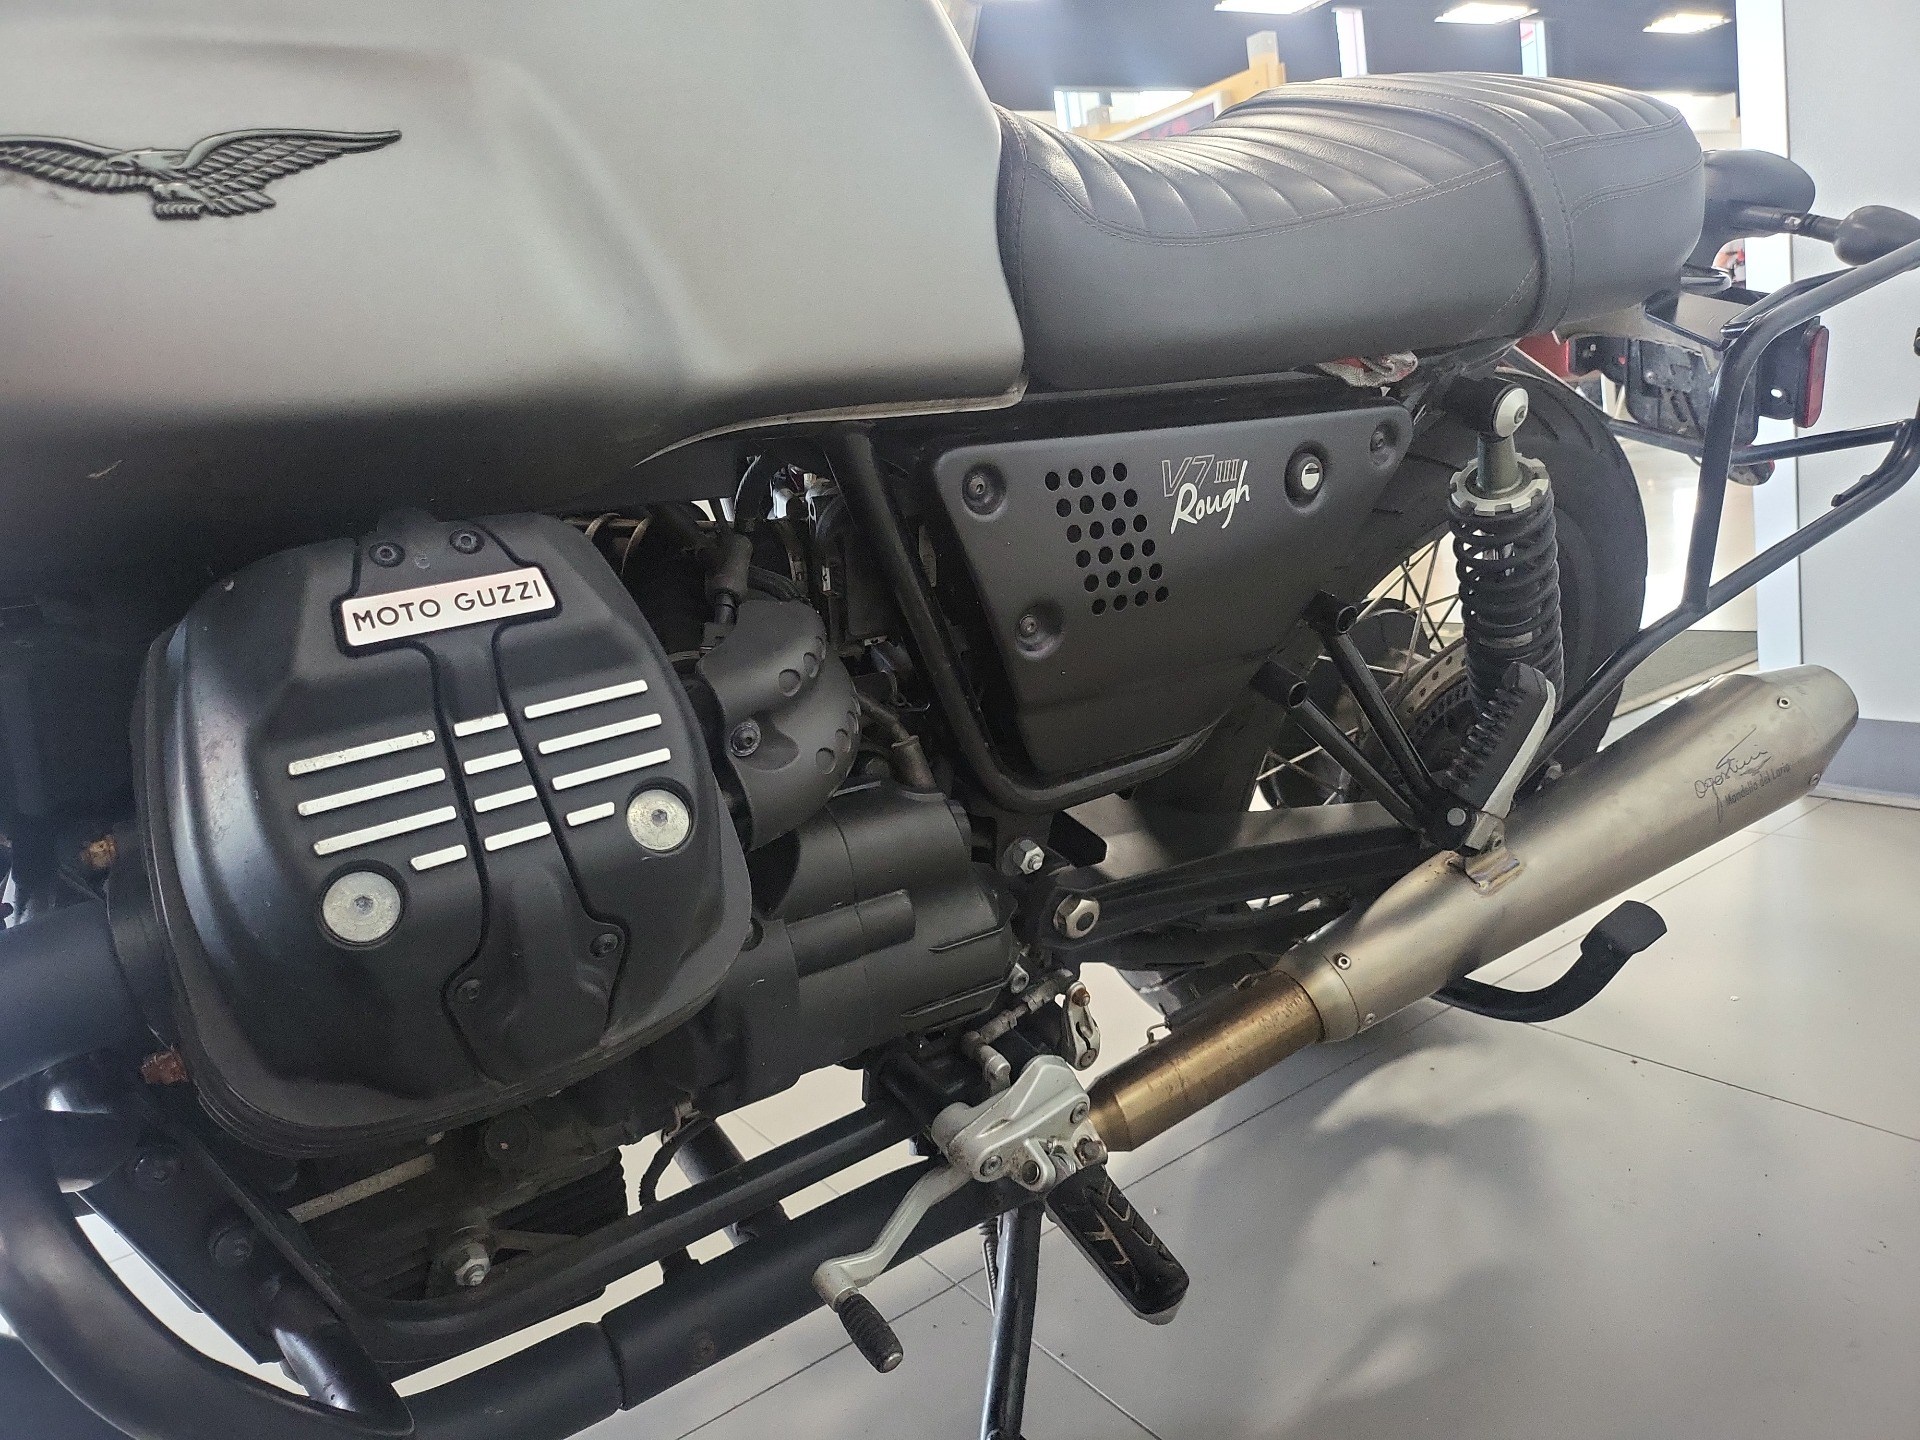 2018 Moto Guzzi V7 III Rough in Springfield, Missouri - Photo 7